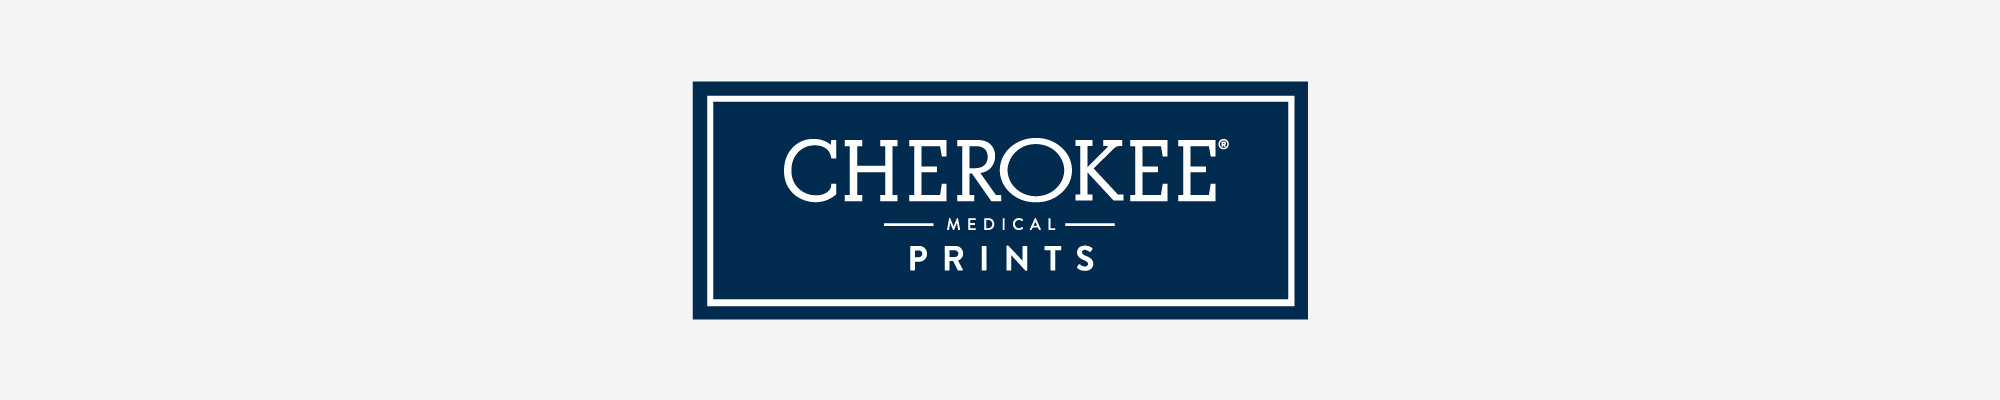 Cherokee Prints